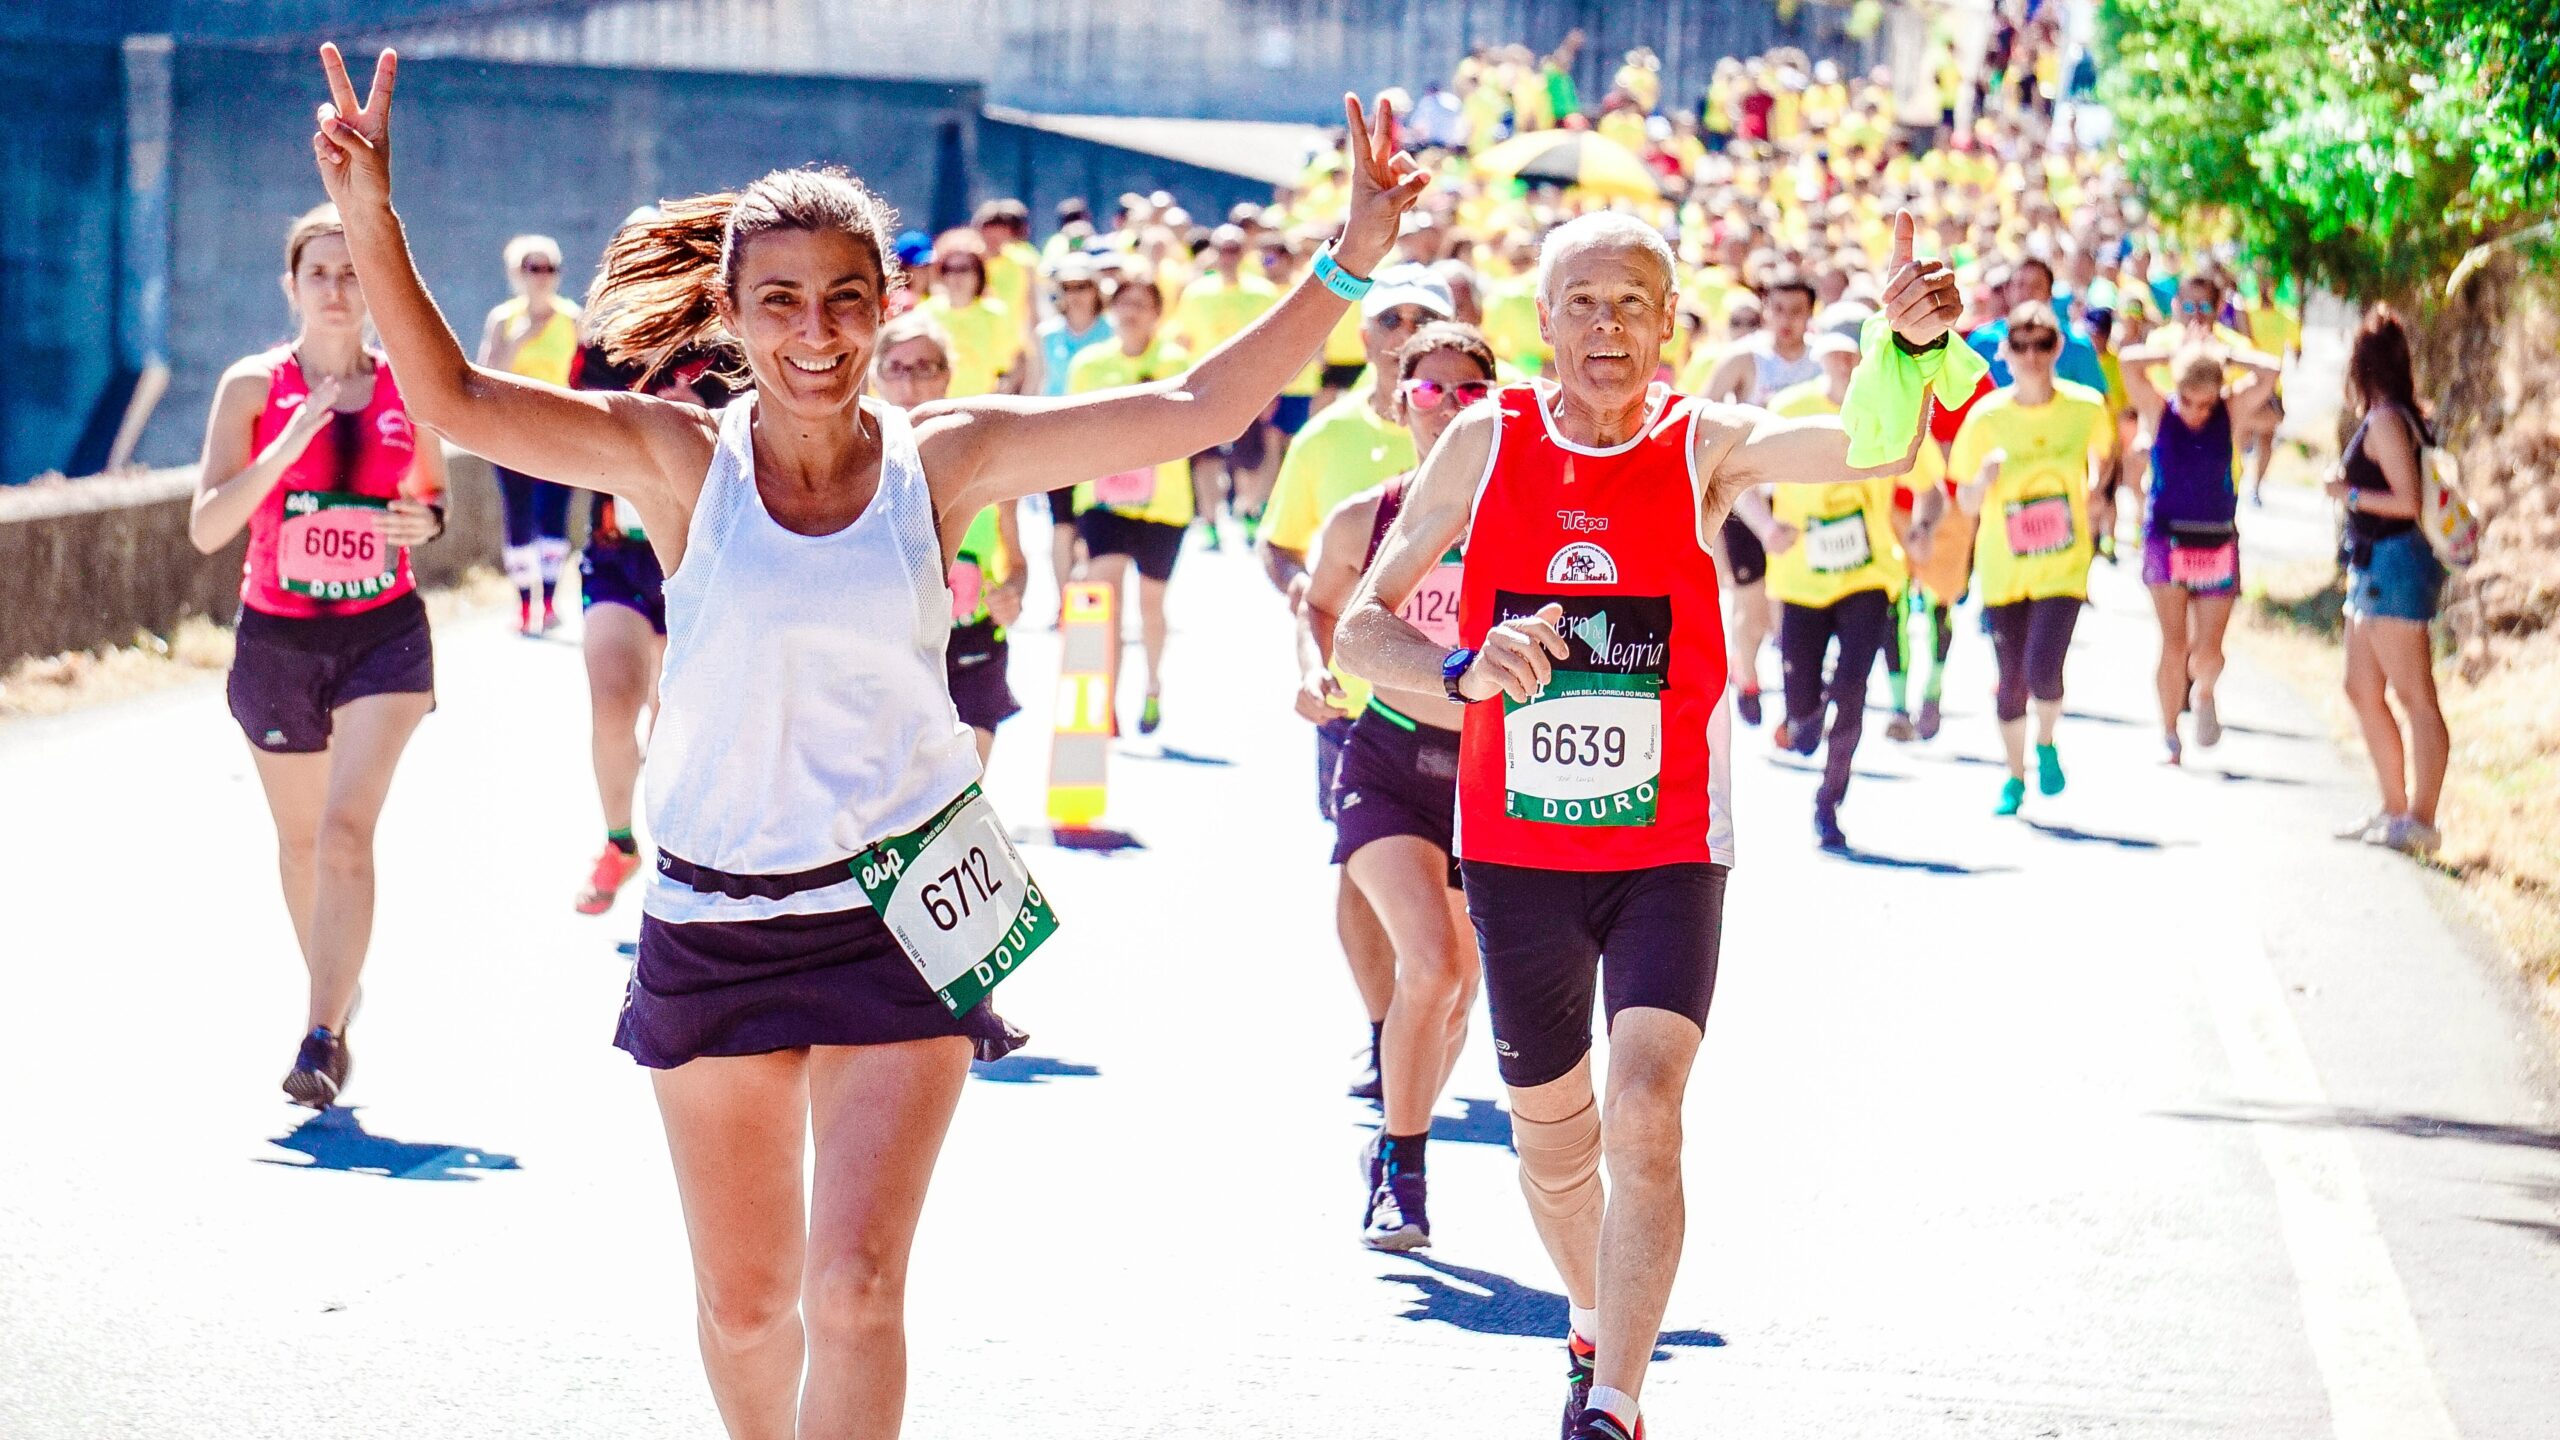 Photo by RUN 4 FFWPU: https://www.pexels.com/photo/female-and-male-runners-on-a-marathon-2402777/